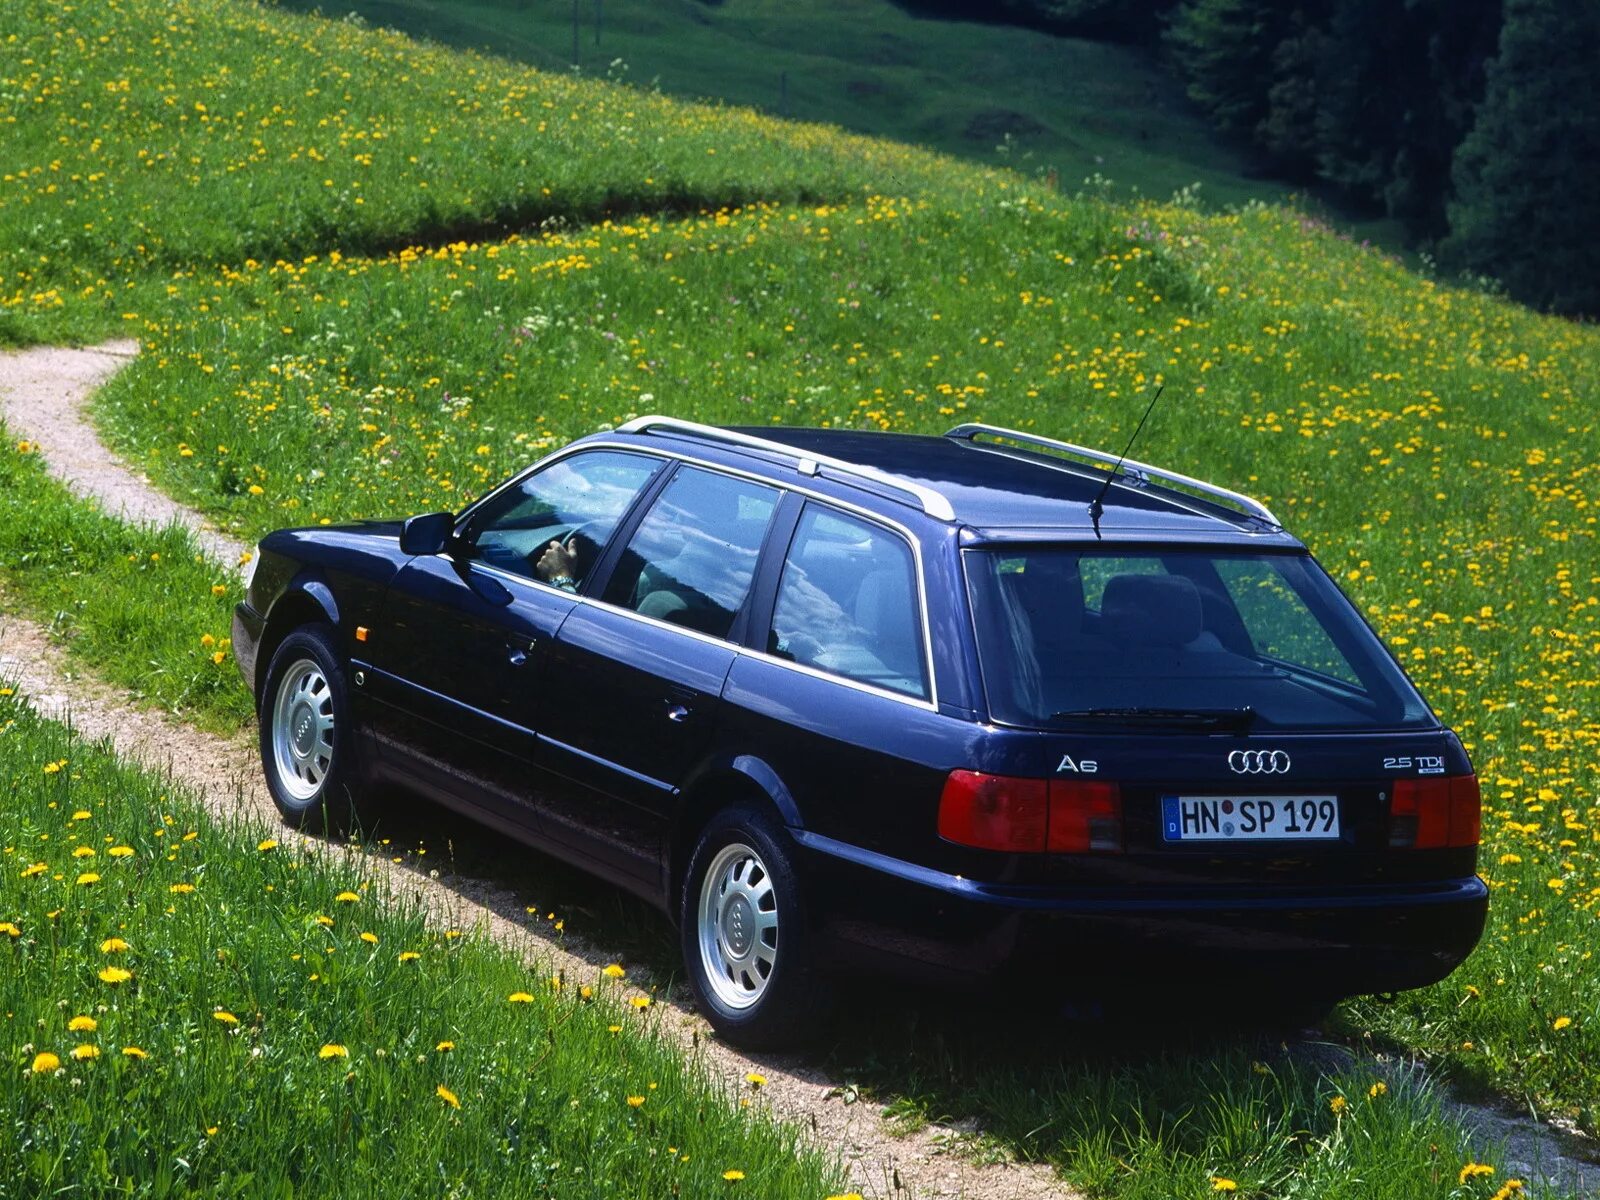 A6 c4 2.6. Audi a6 универсал 1995. Audi a6 c4 Авант. Audi a6 1996 универсал. Audi a6 c4 1996 универсал.